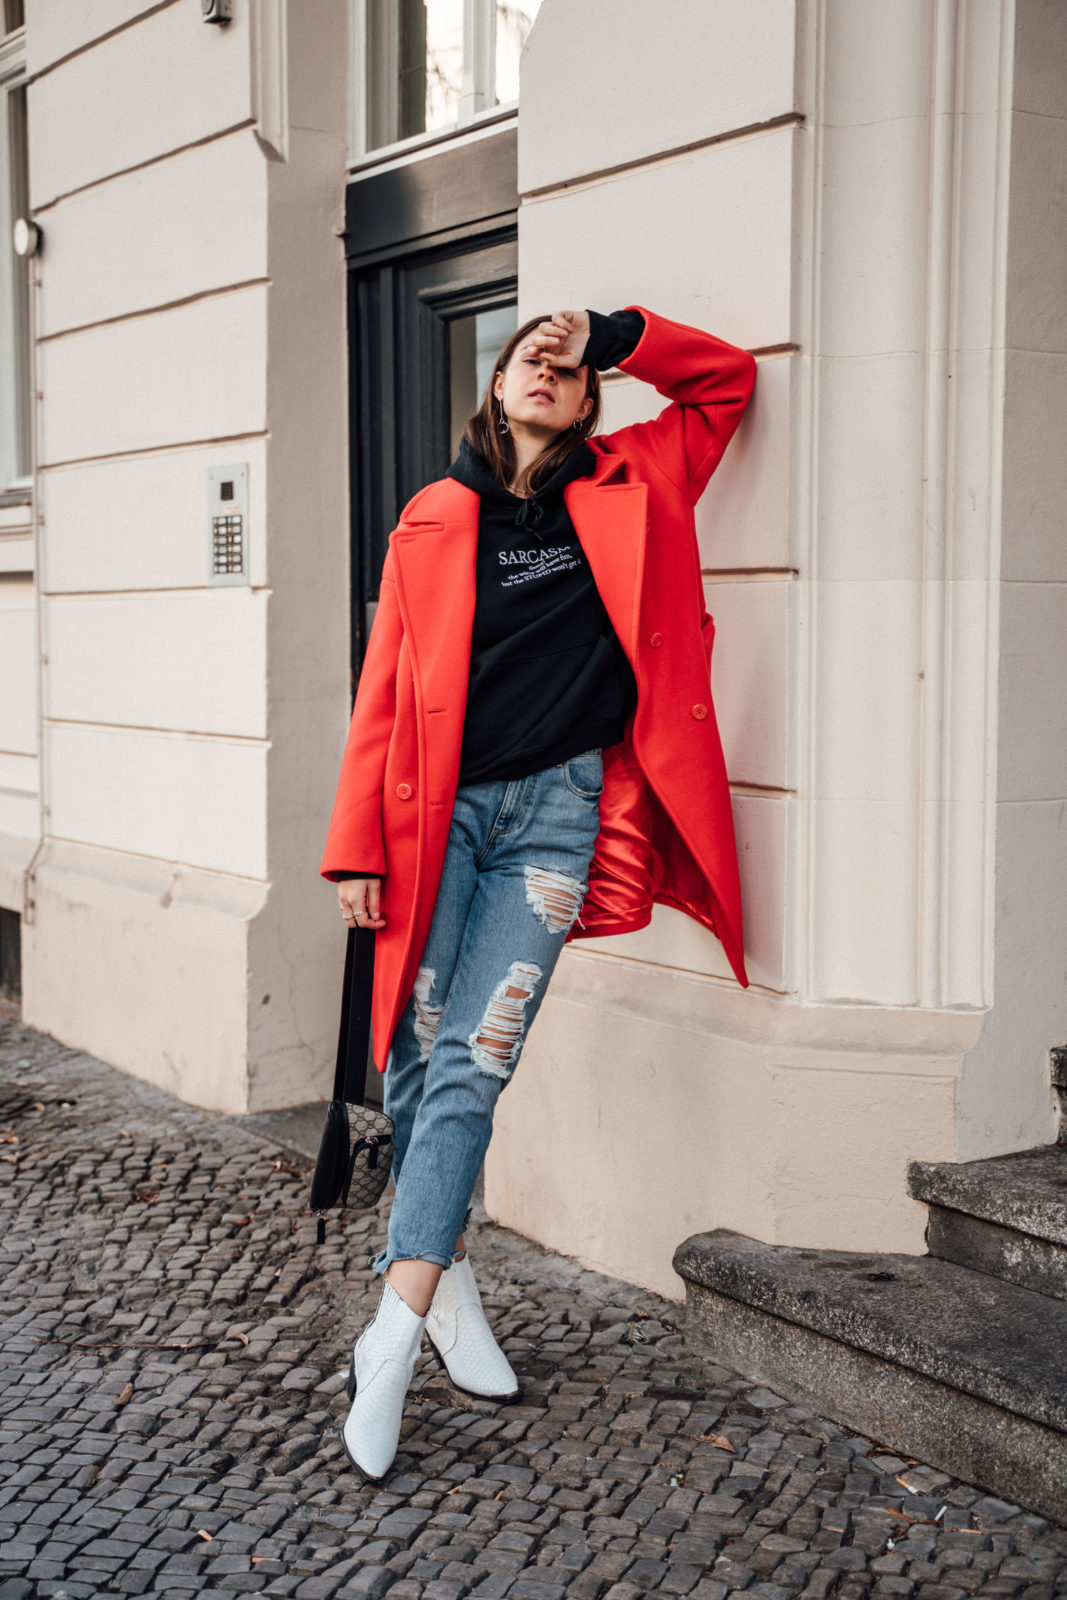 Wearing a red coat in winter || Fashionblog Berlin